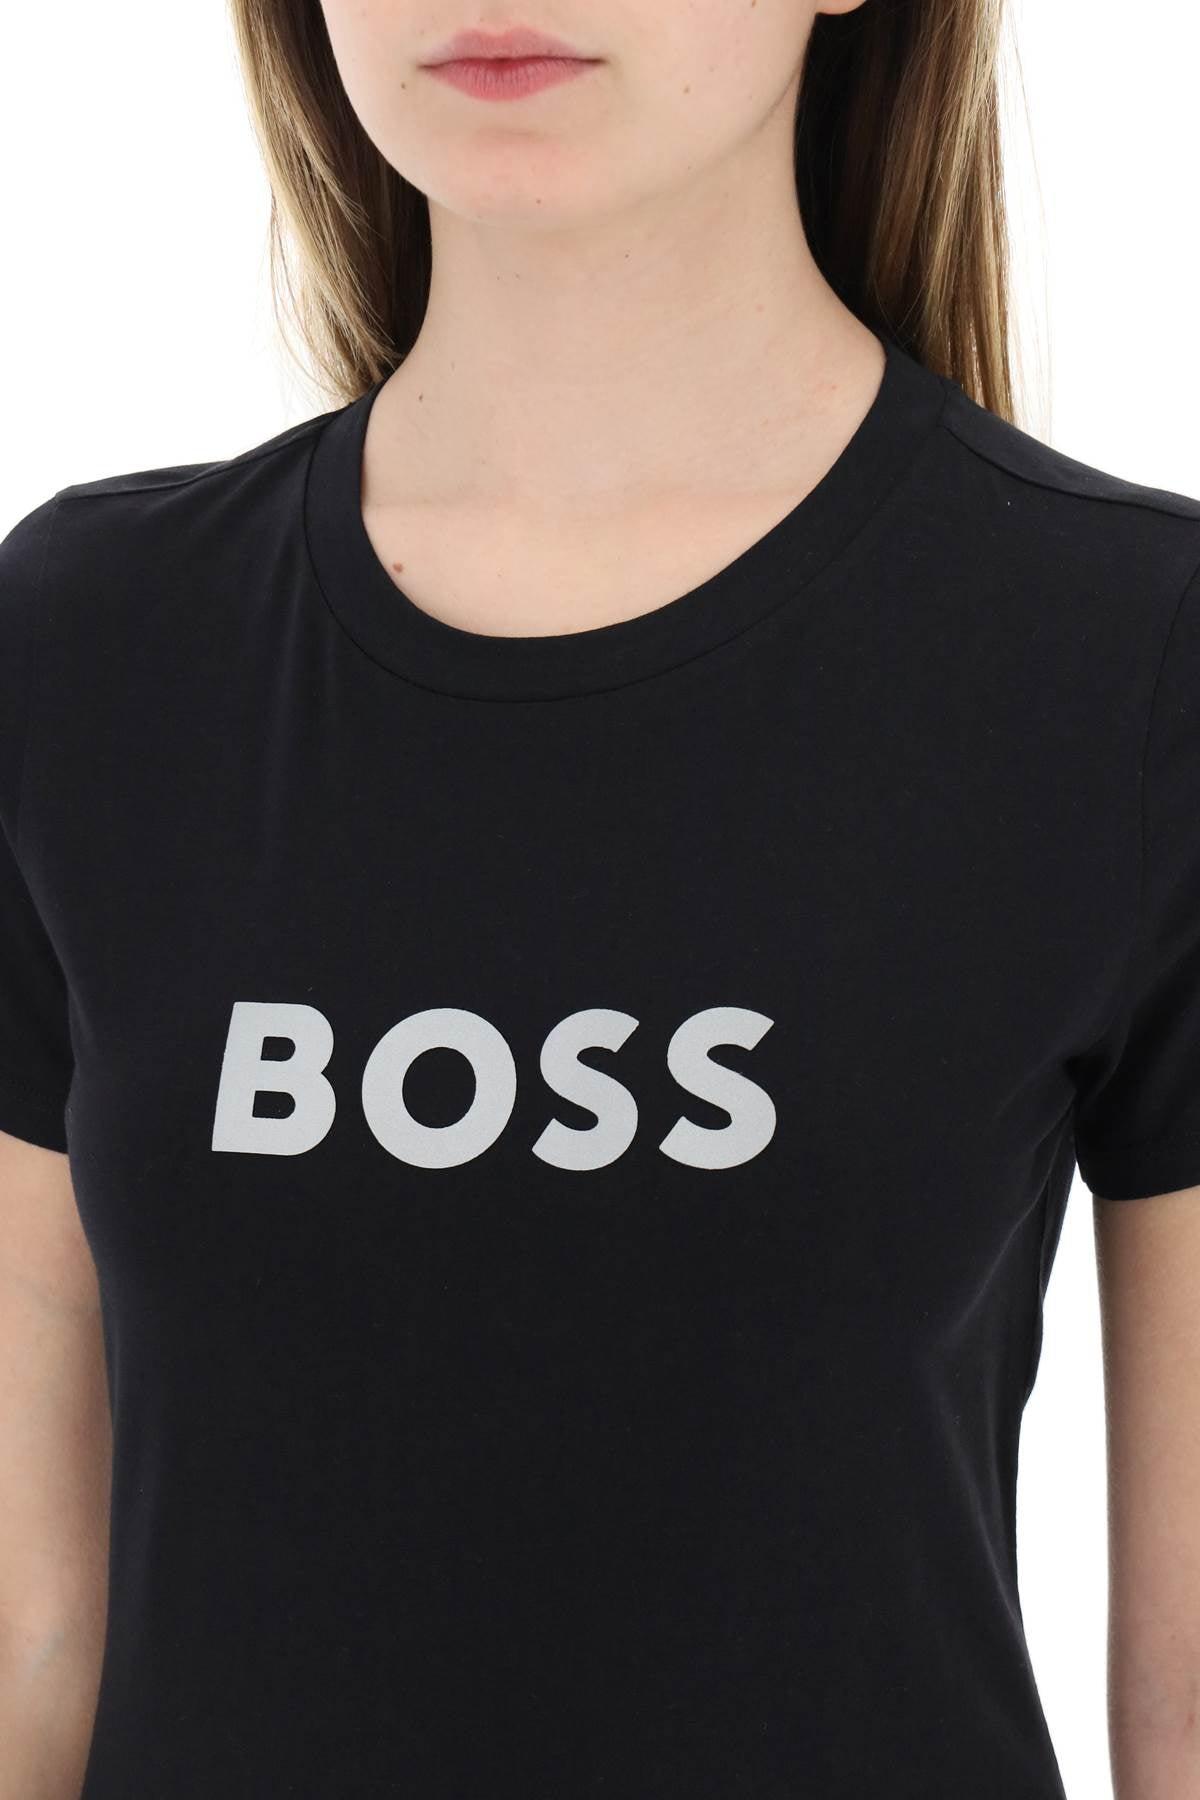 BOSS by HUGO BOSS Logo T-shirt in Black | Lyst